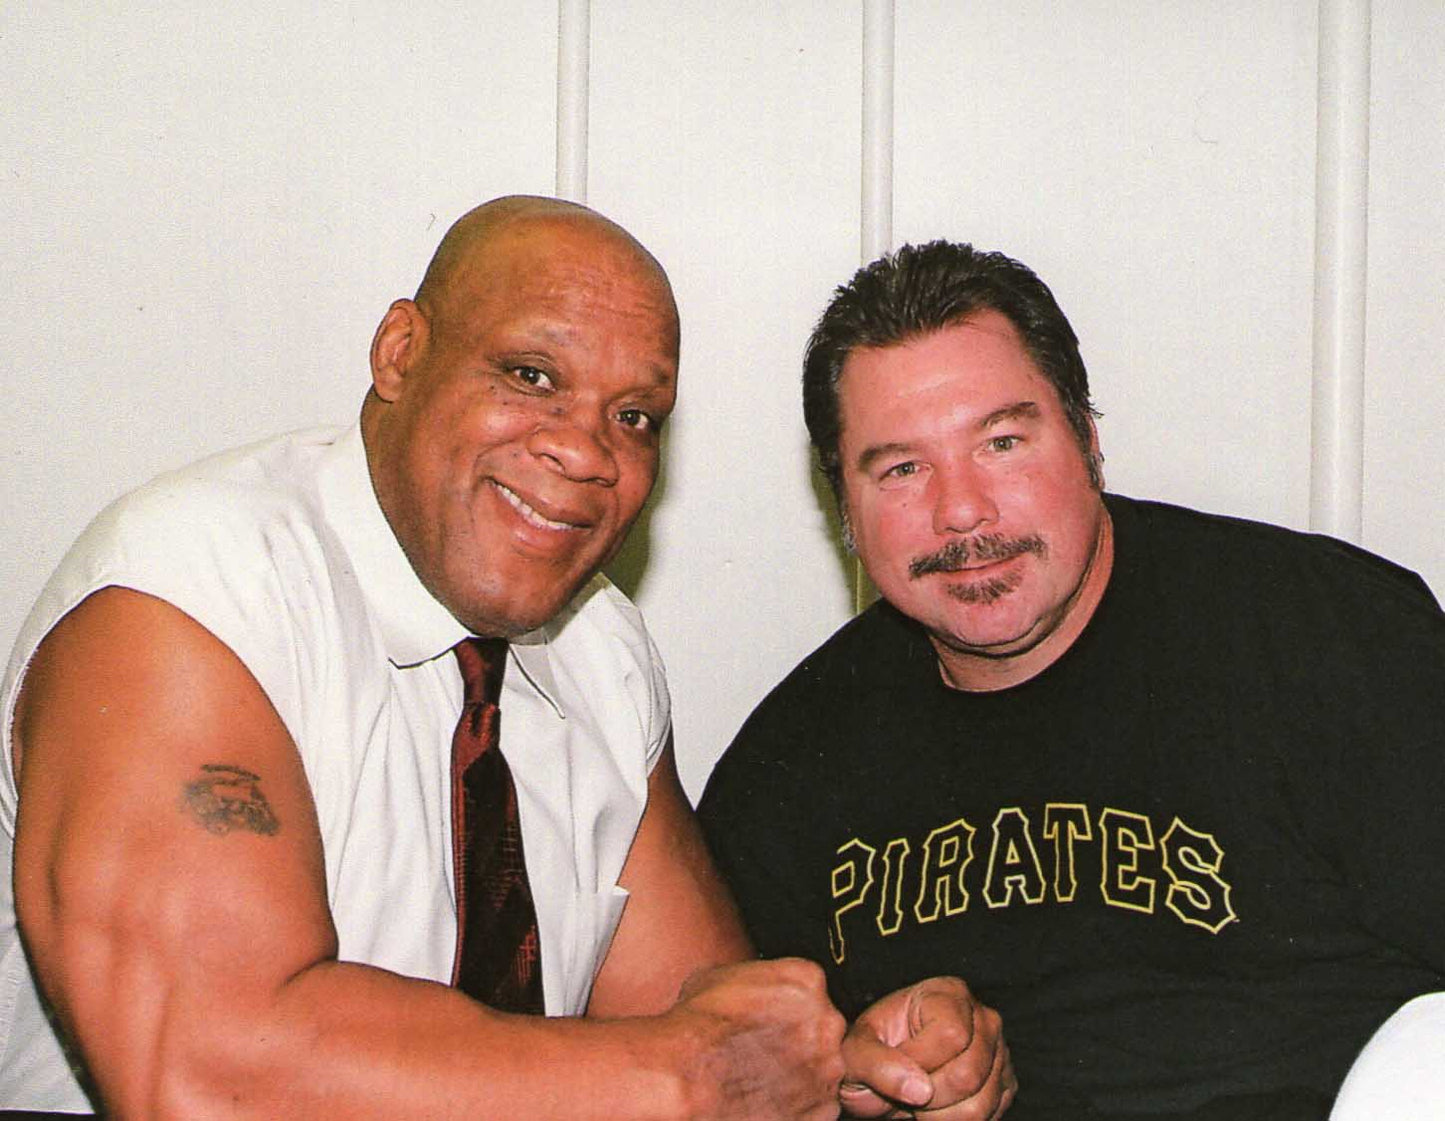 TA1  Tony Atlas Autographed Action Figure signed Display vs Hulk Hogan w/COA